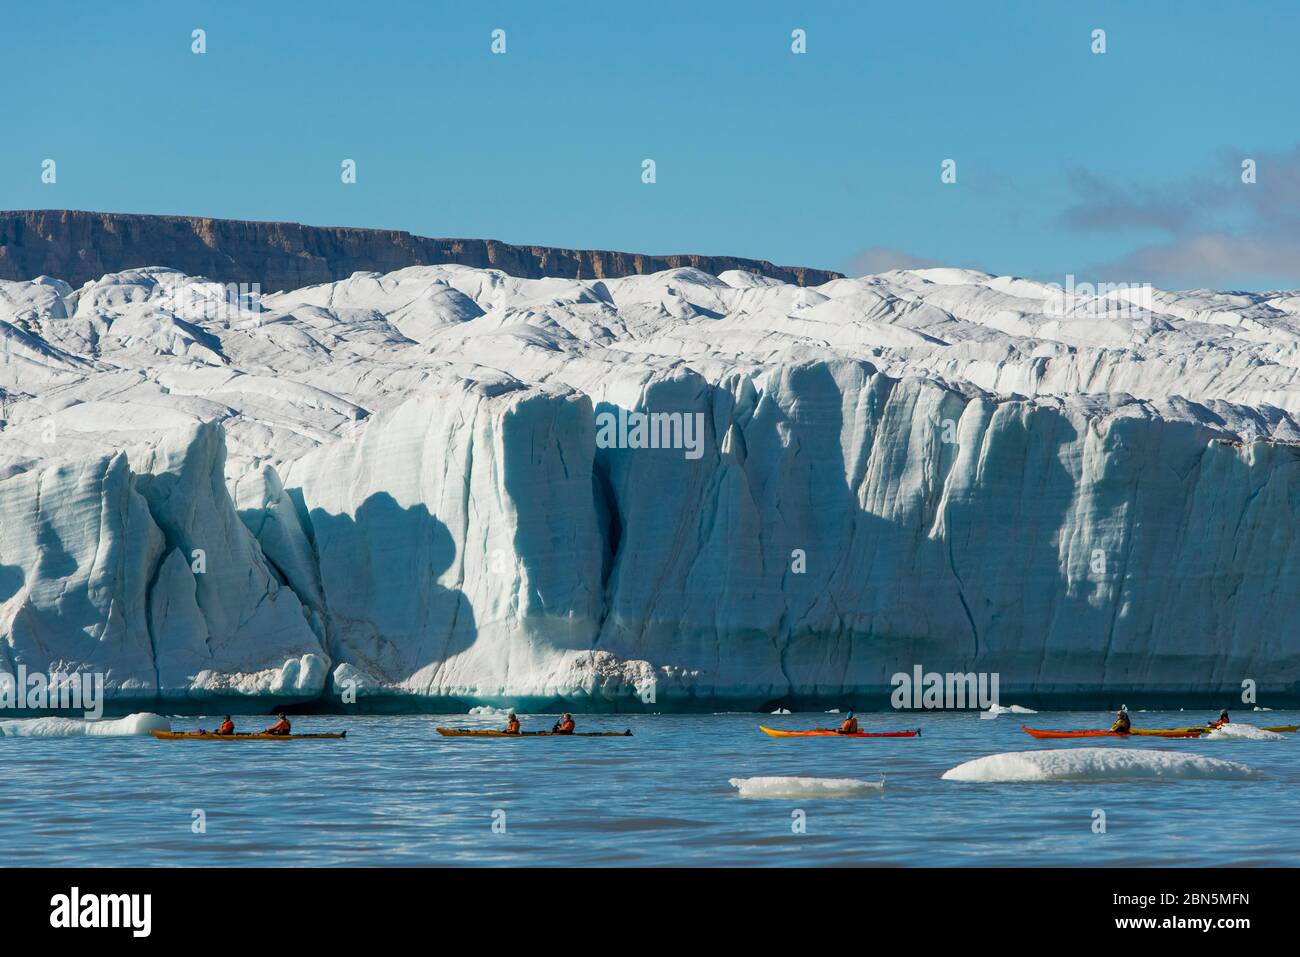 Touristen in Kajaks vor Gletschern, Croker Bay, Nunavut, Devon Island, Arktis, Kanada Stockfoto